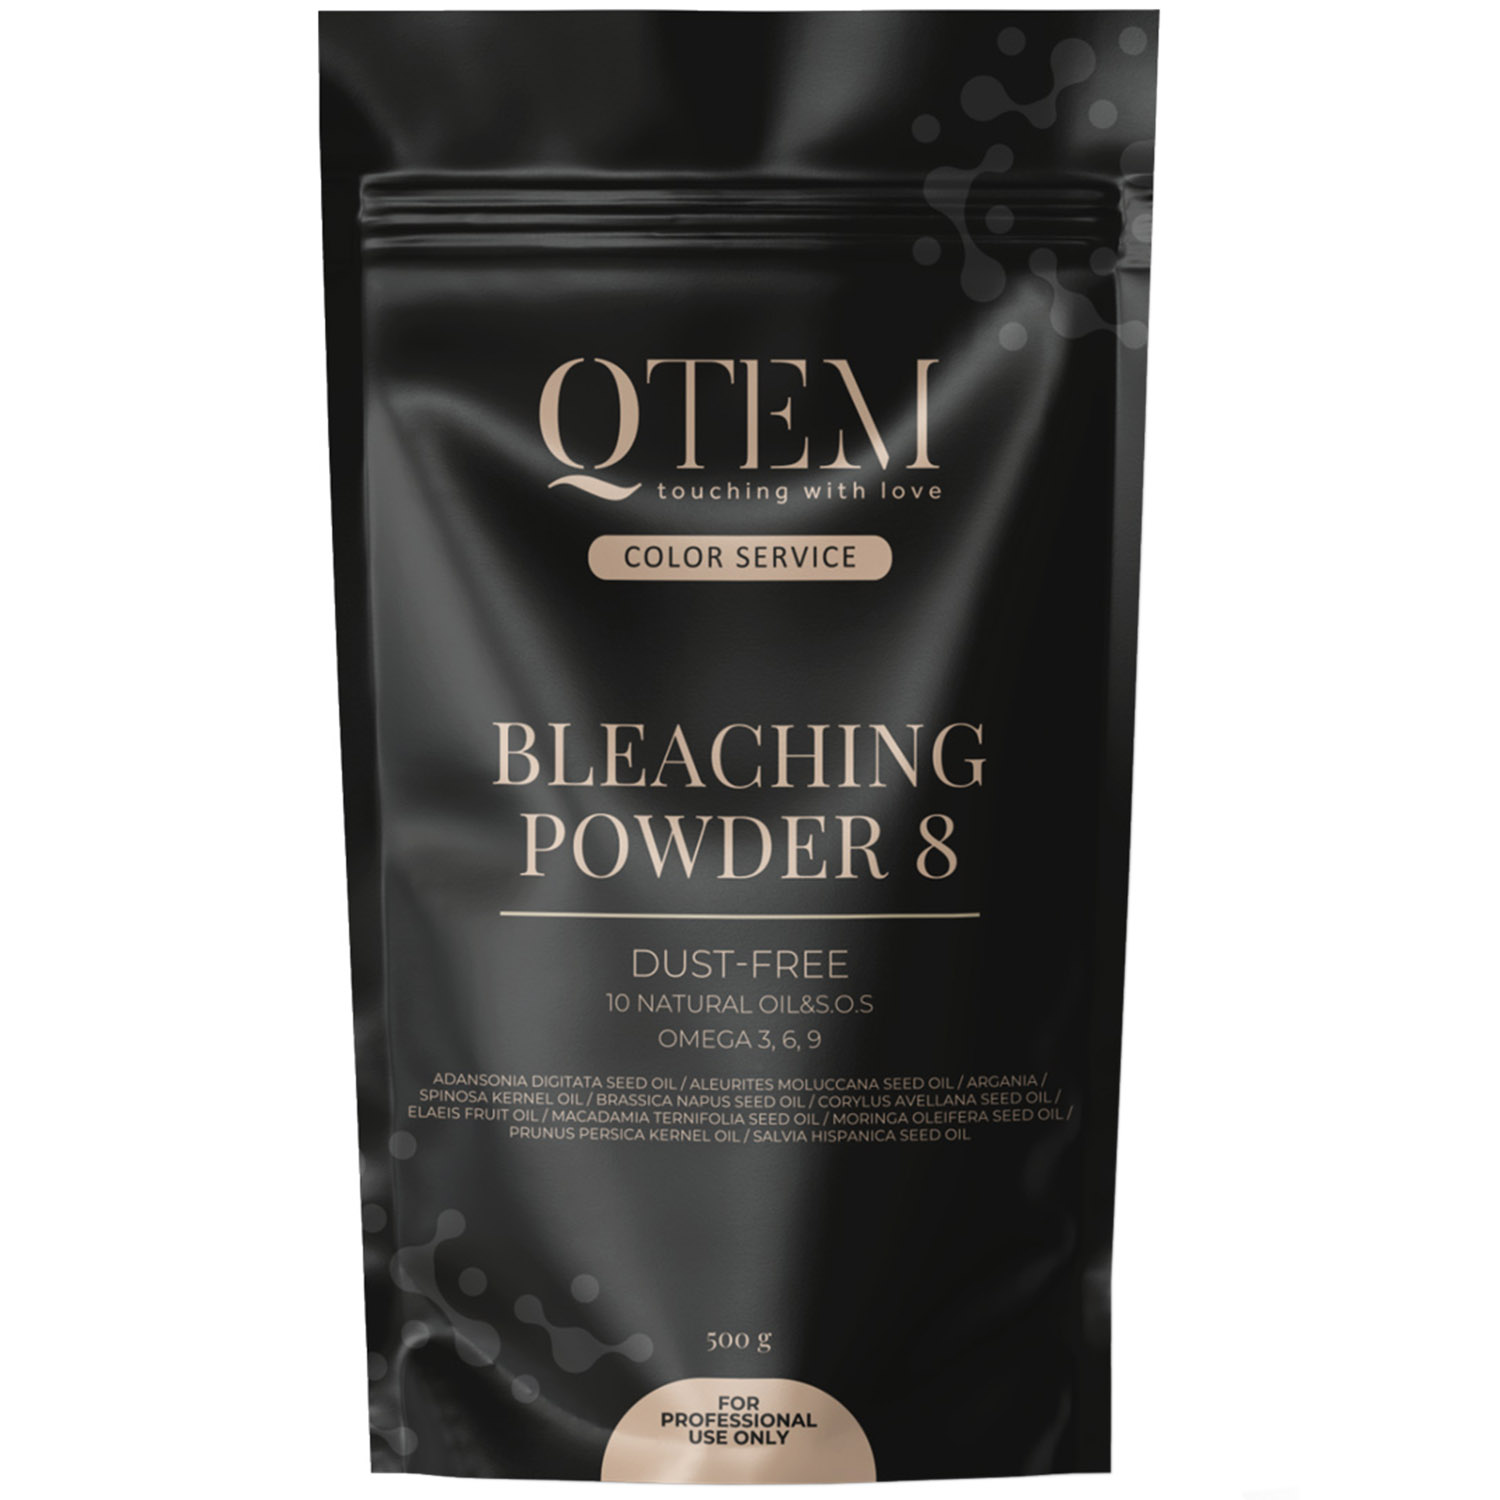 цена Qtem Обесцвечивающий порошок Bleaching Powder 8, 500 г (Qtem, Color Service)